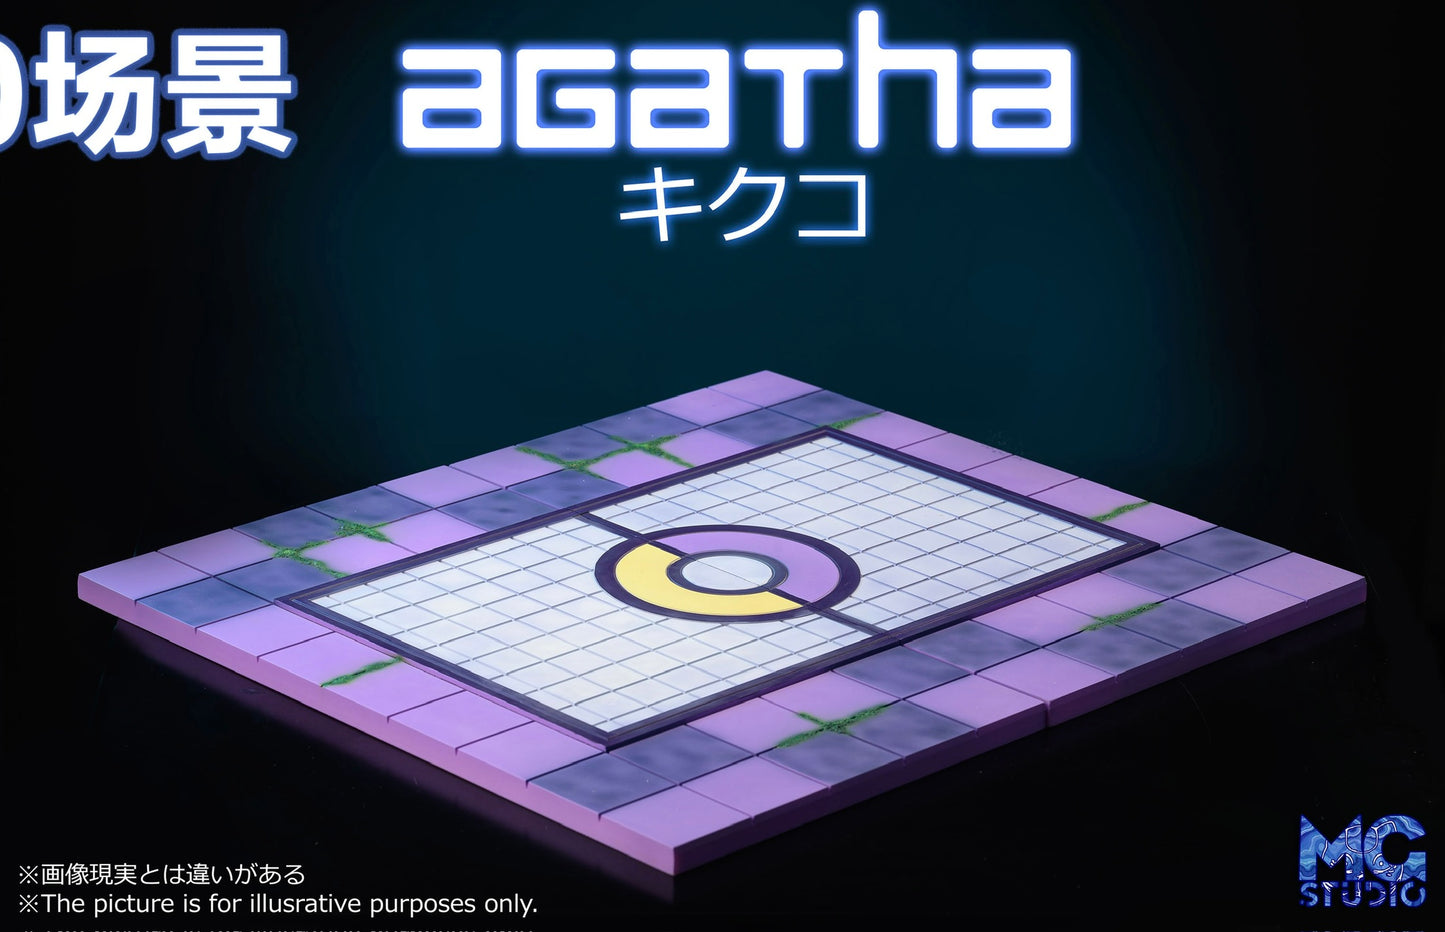 [PREORDER] 1/20 Scale World Figure [MG] - Agatha